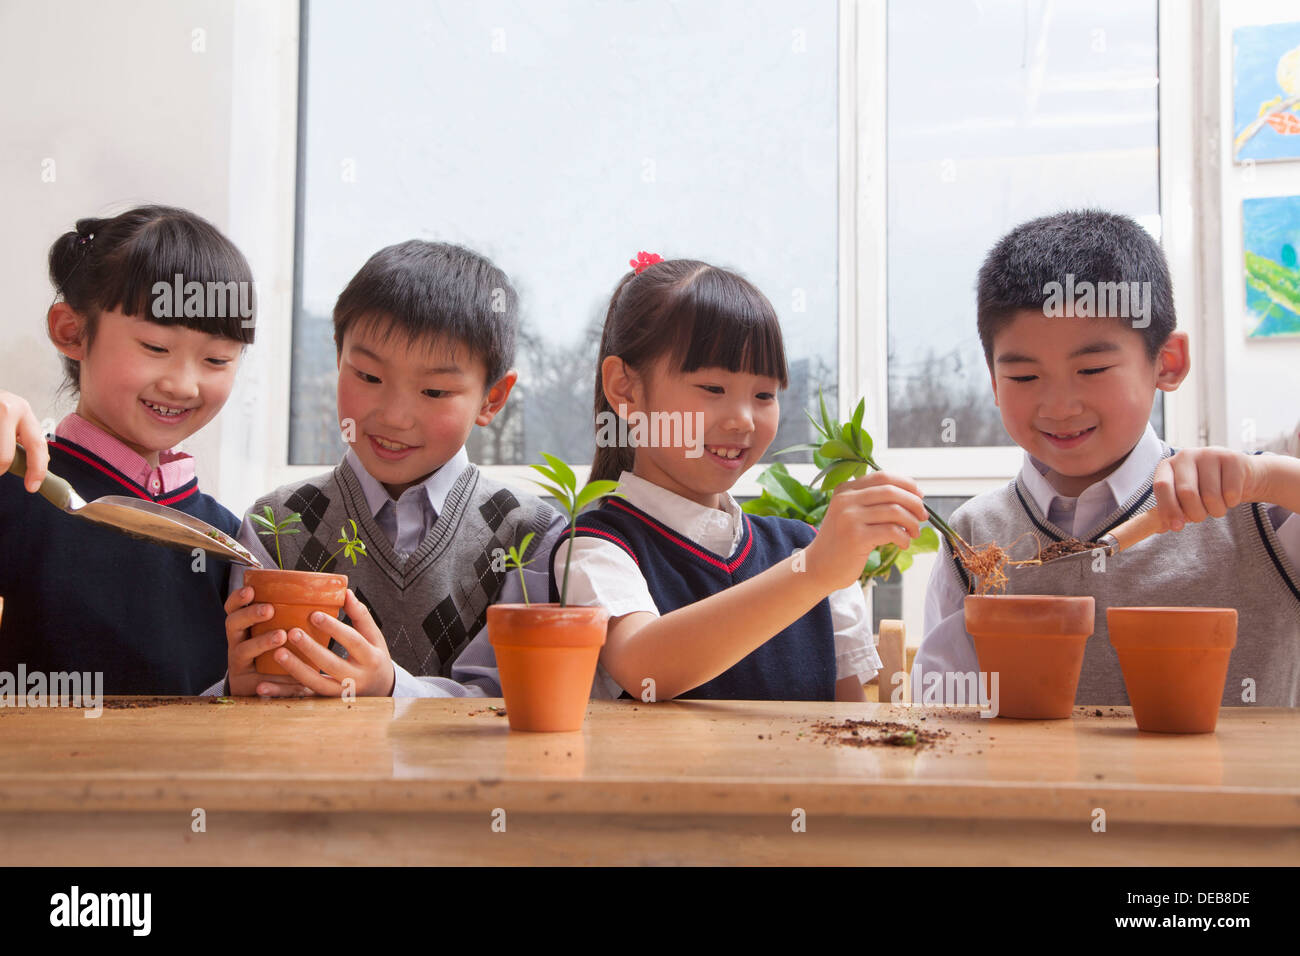 Schoolchildren planting plants into flowerpots in the classroom Stock Photo